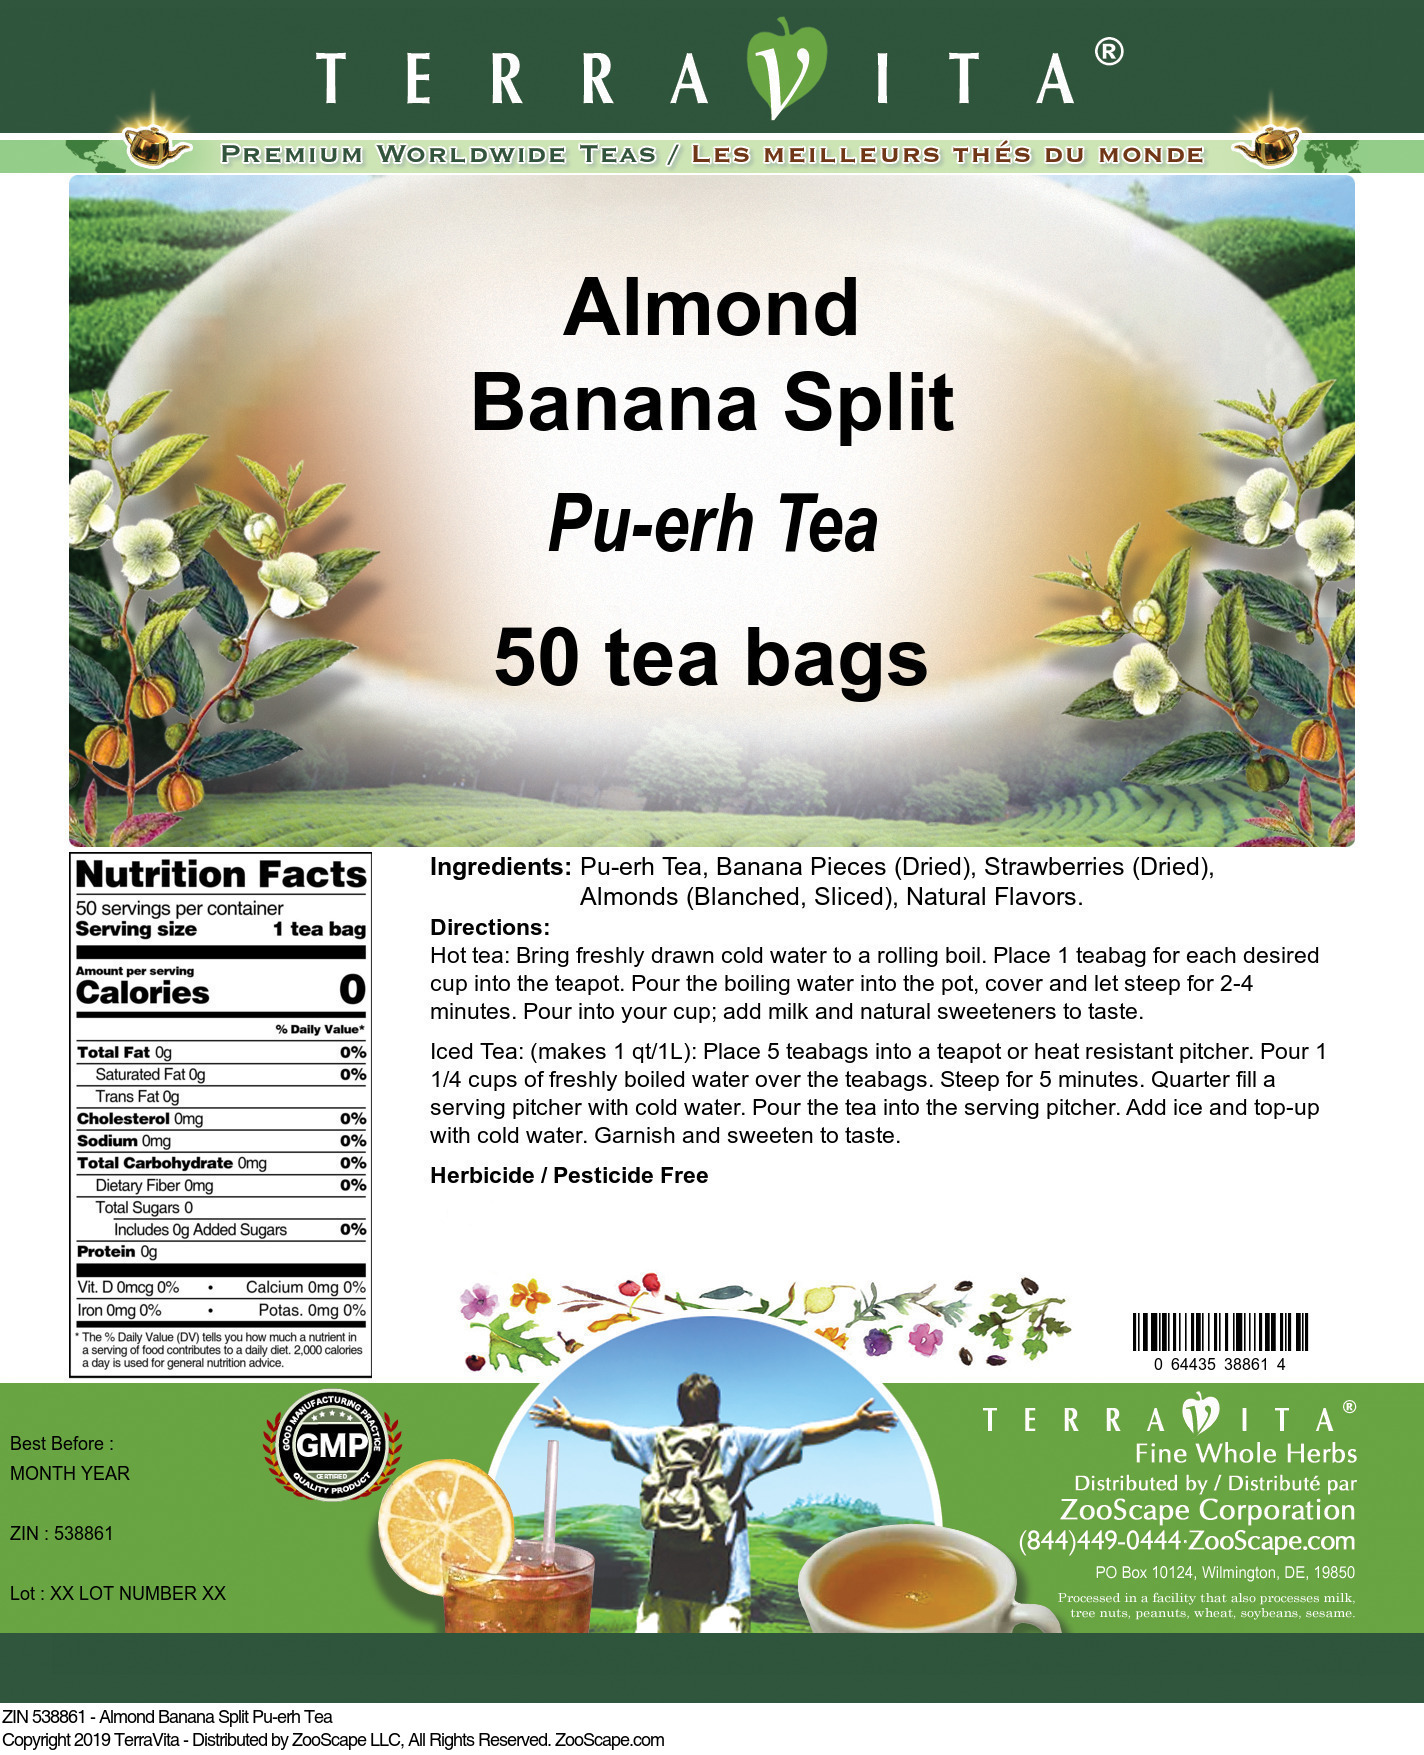 Almond Banana Split Pu-erh Tea - Label